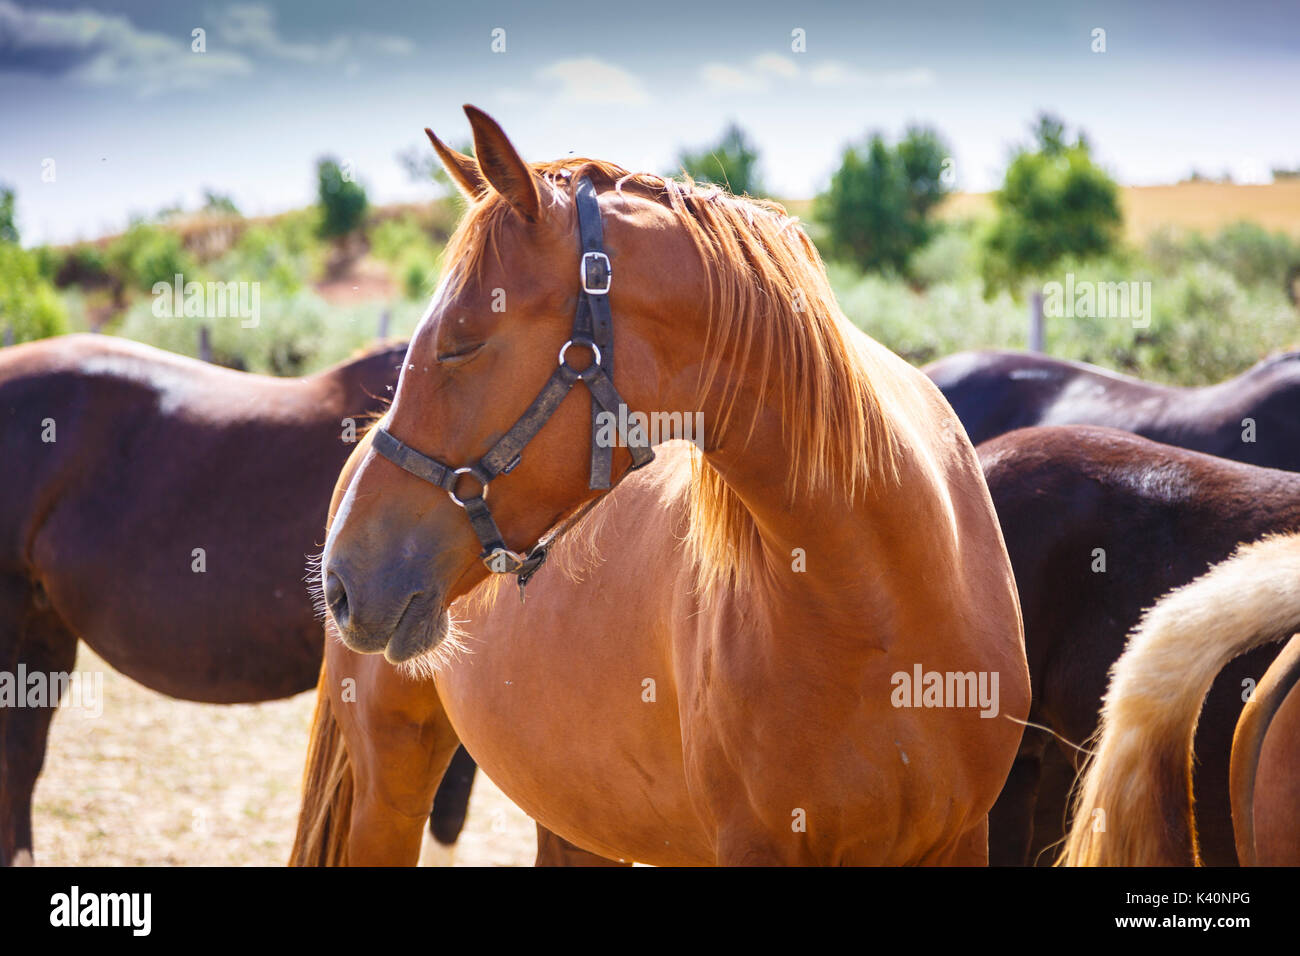 Horses on a farm. Dicastillo. Tierra Estella, Navarre. Spain, Europe. Stock Photo